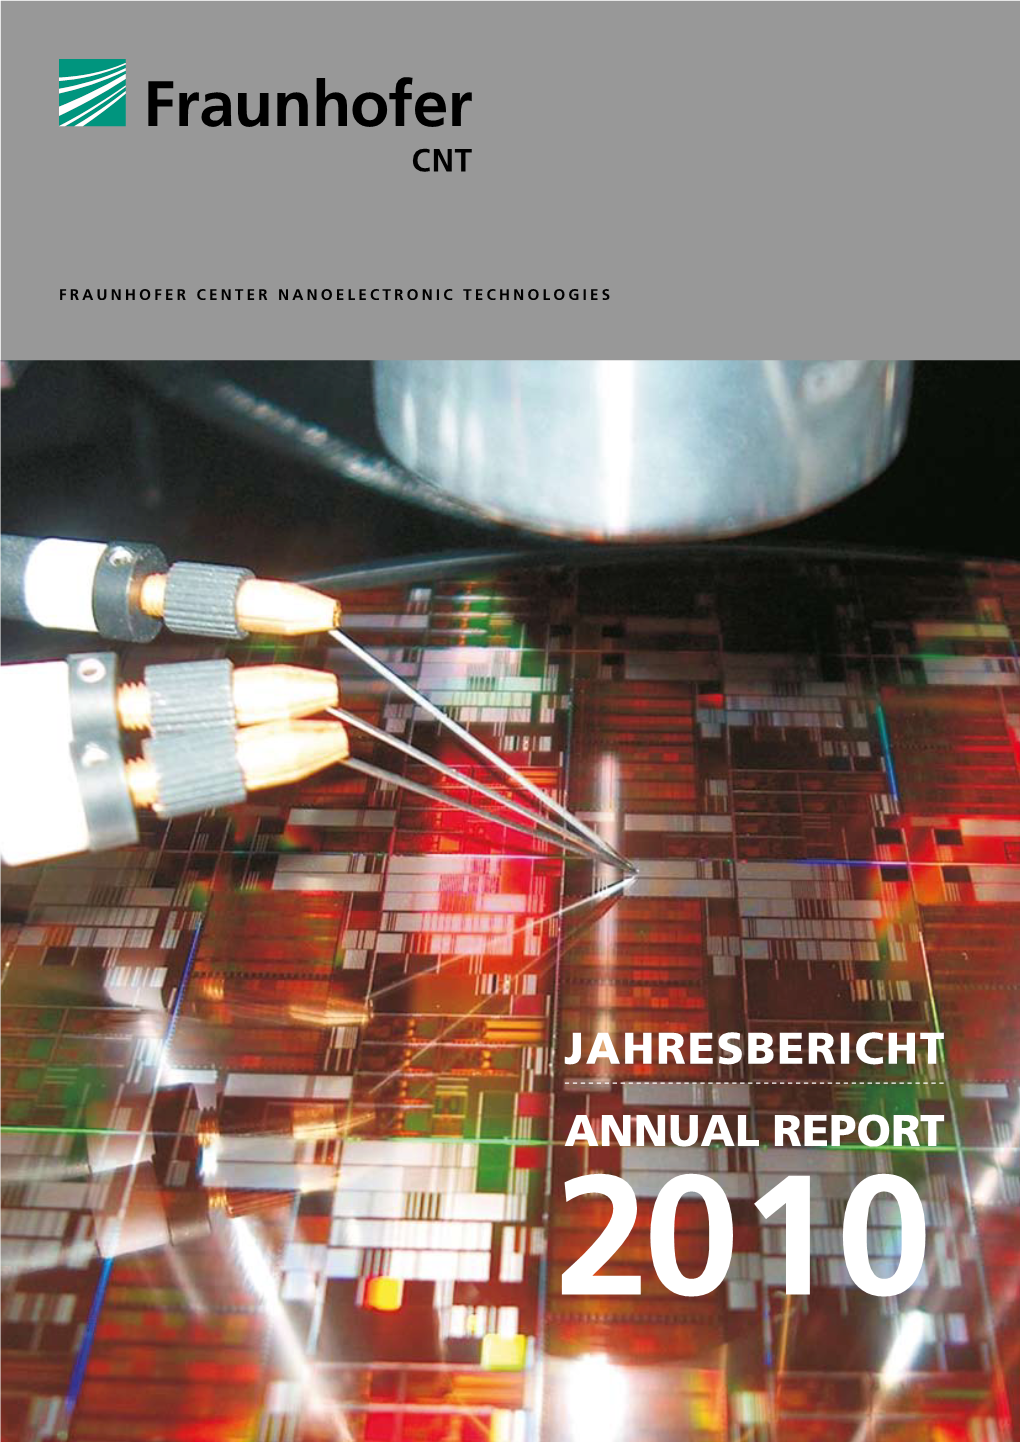 Jahresbericht Annual Report